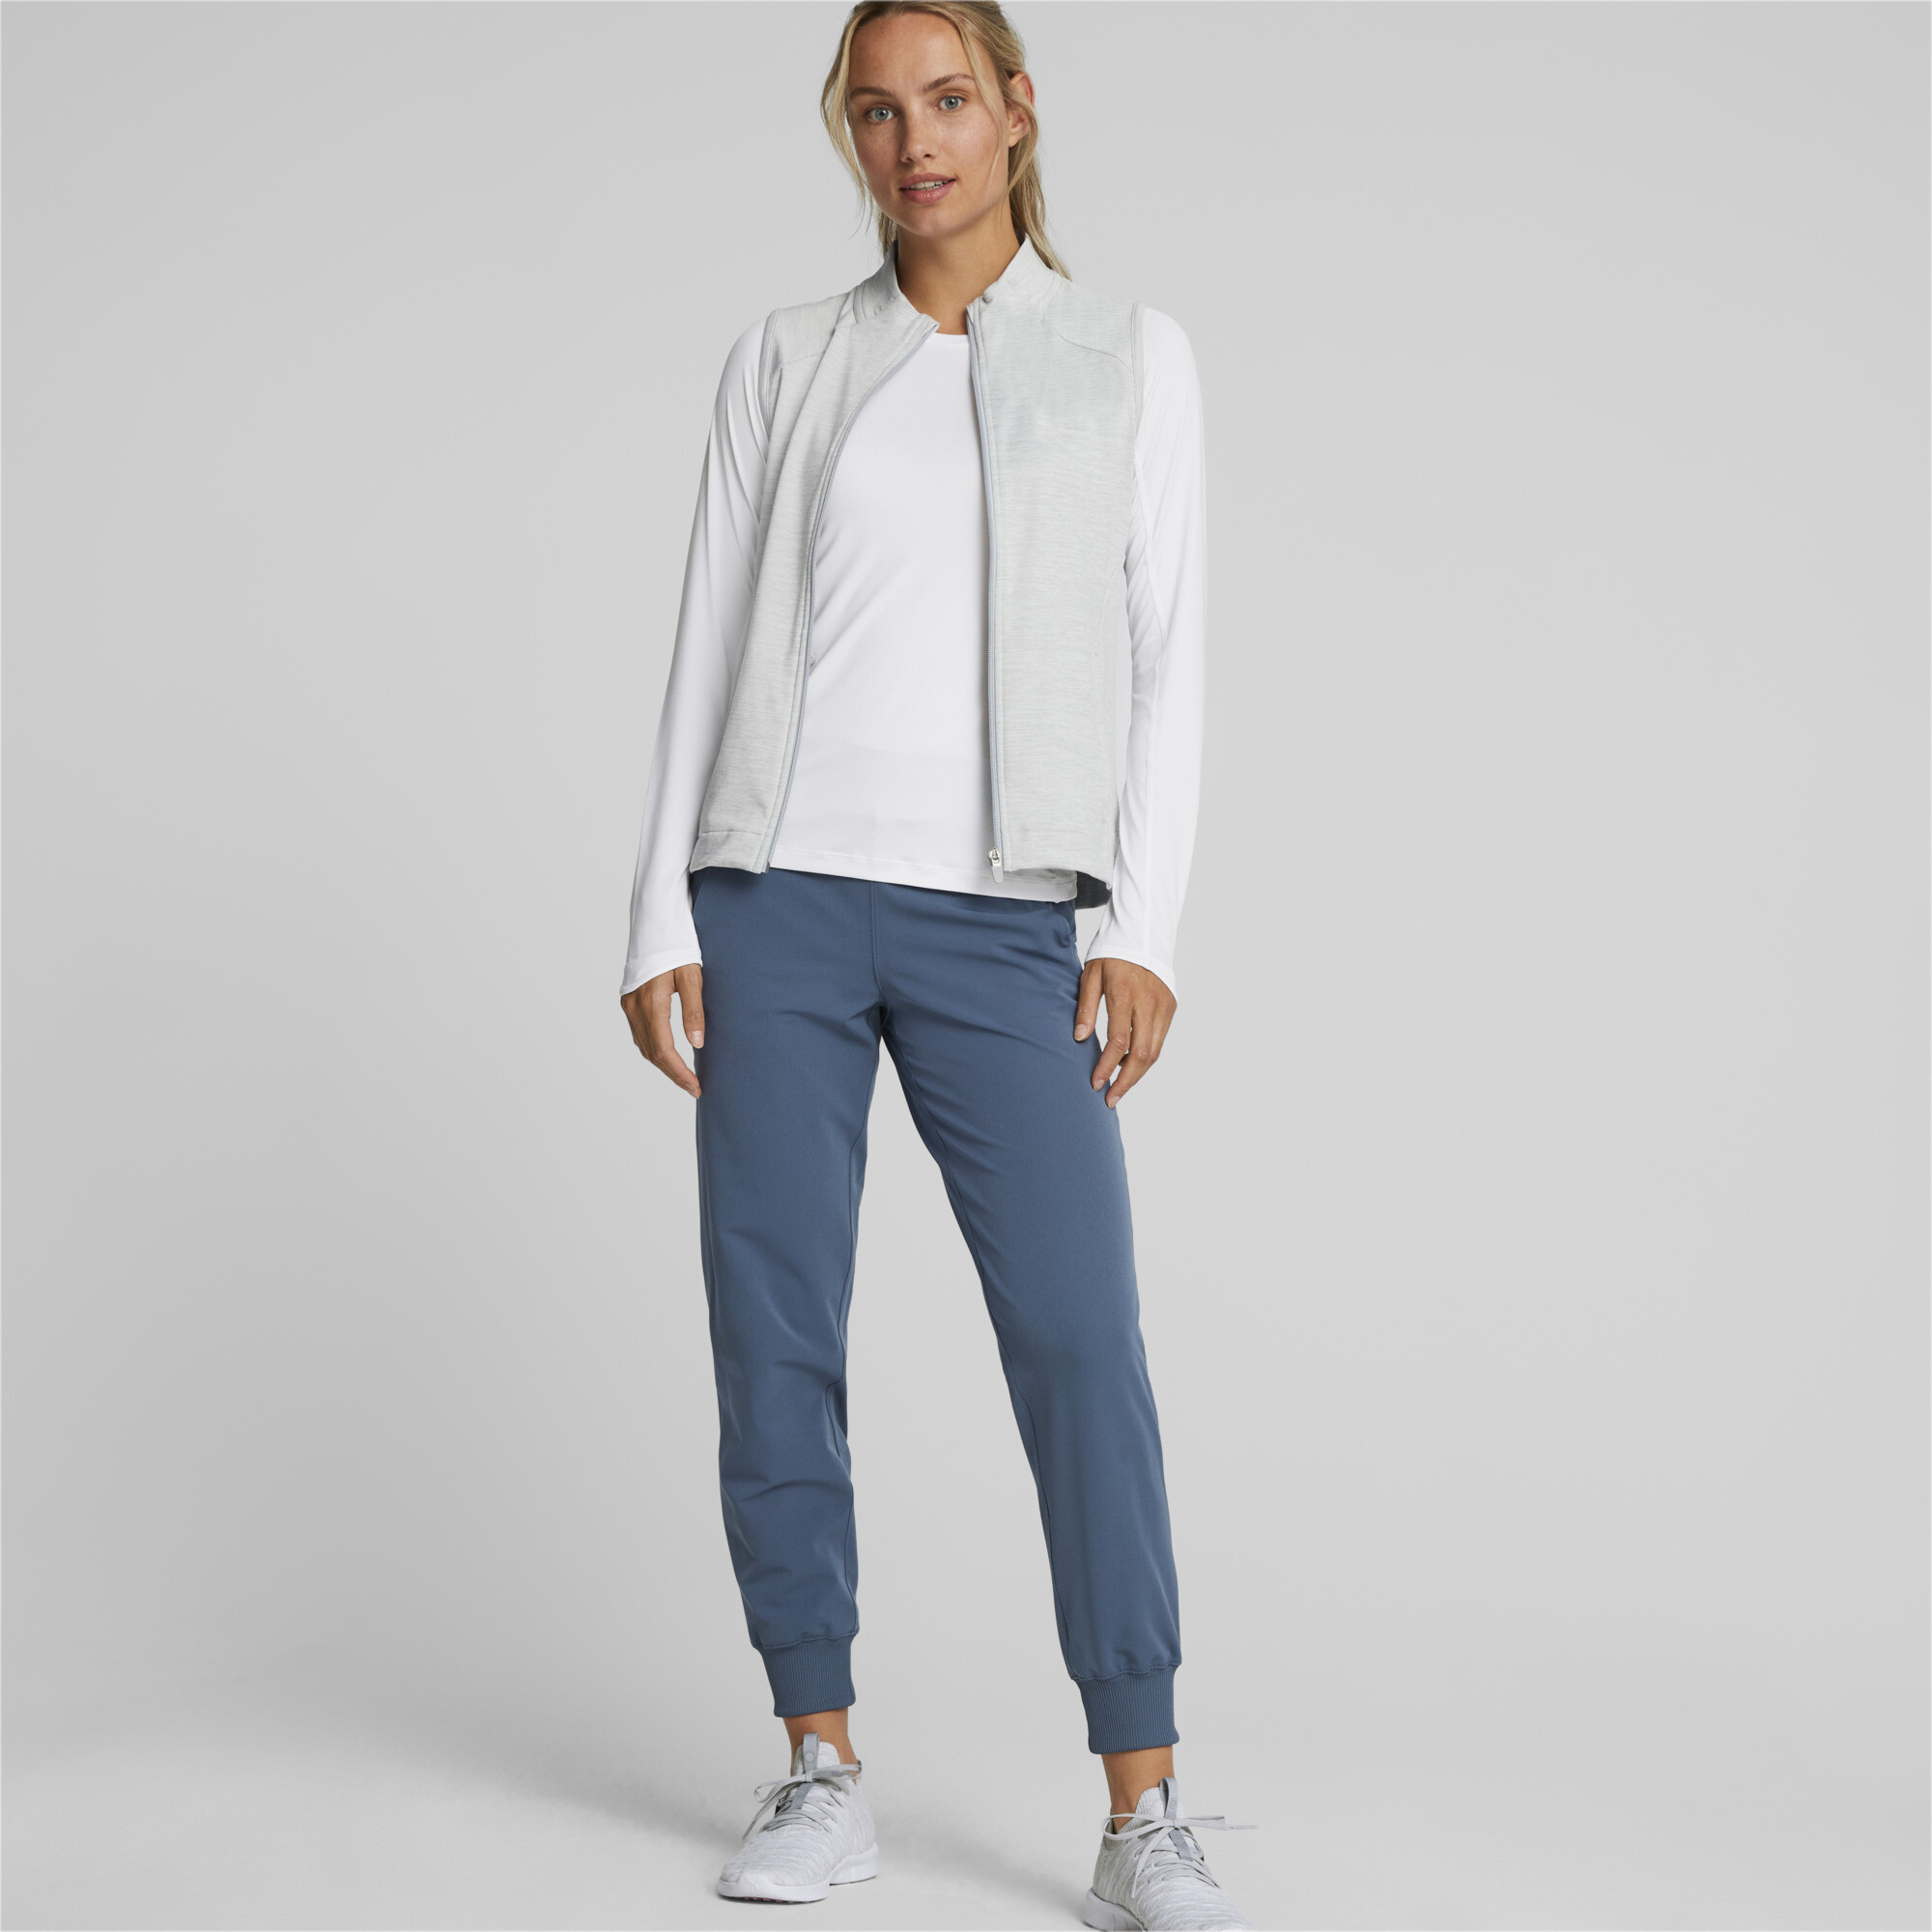 Women's Puma Heather Full-Zip Golf Vest, Gray, Size L, Clothing